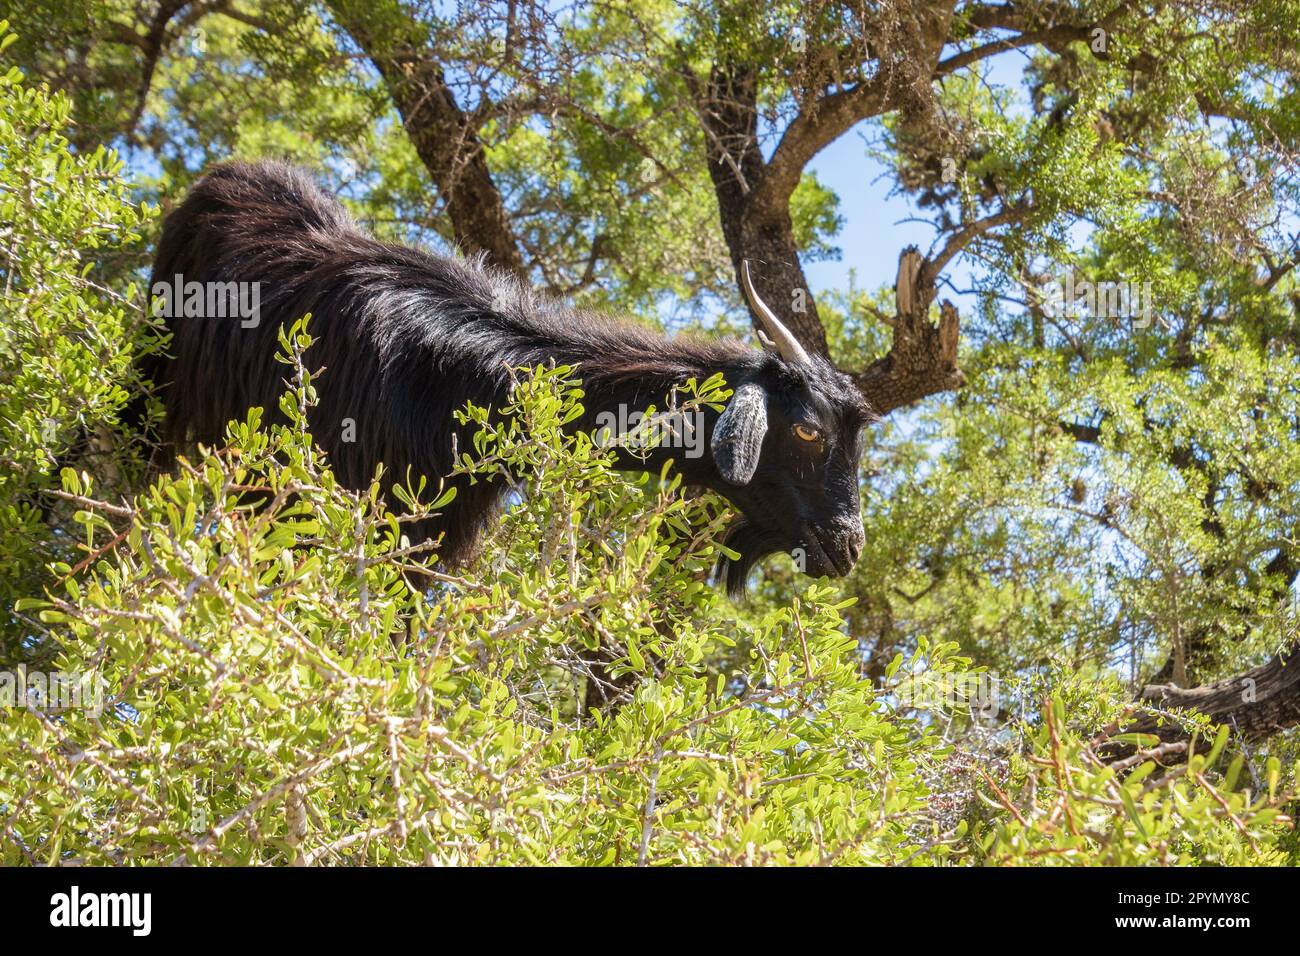 Goat in a tree, Goat feeding on Argan tree in Morocco Stock Photo